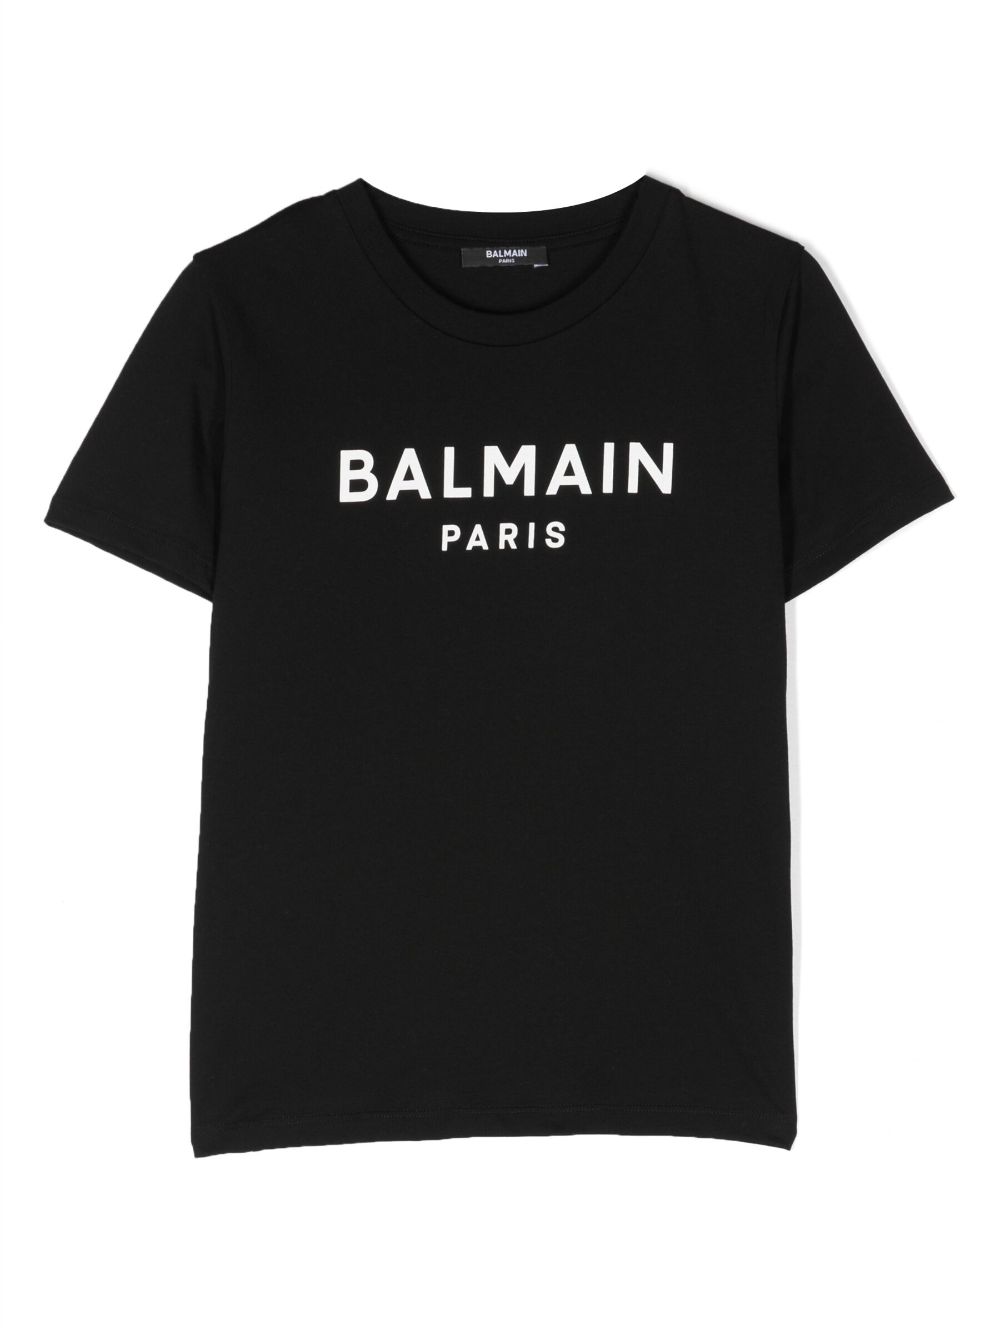 Black cotton jersey boy BALMAIN t-shirt